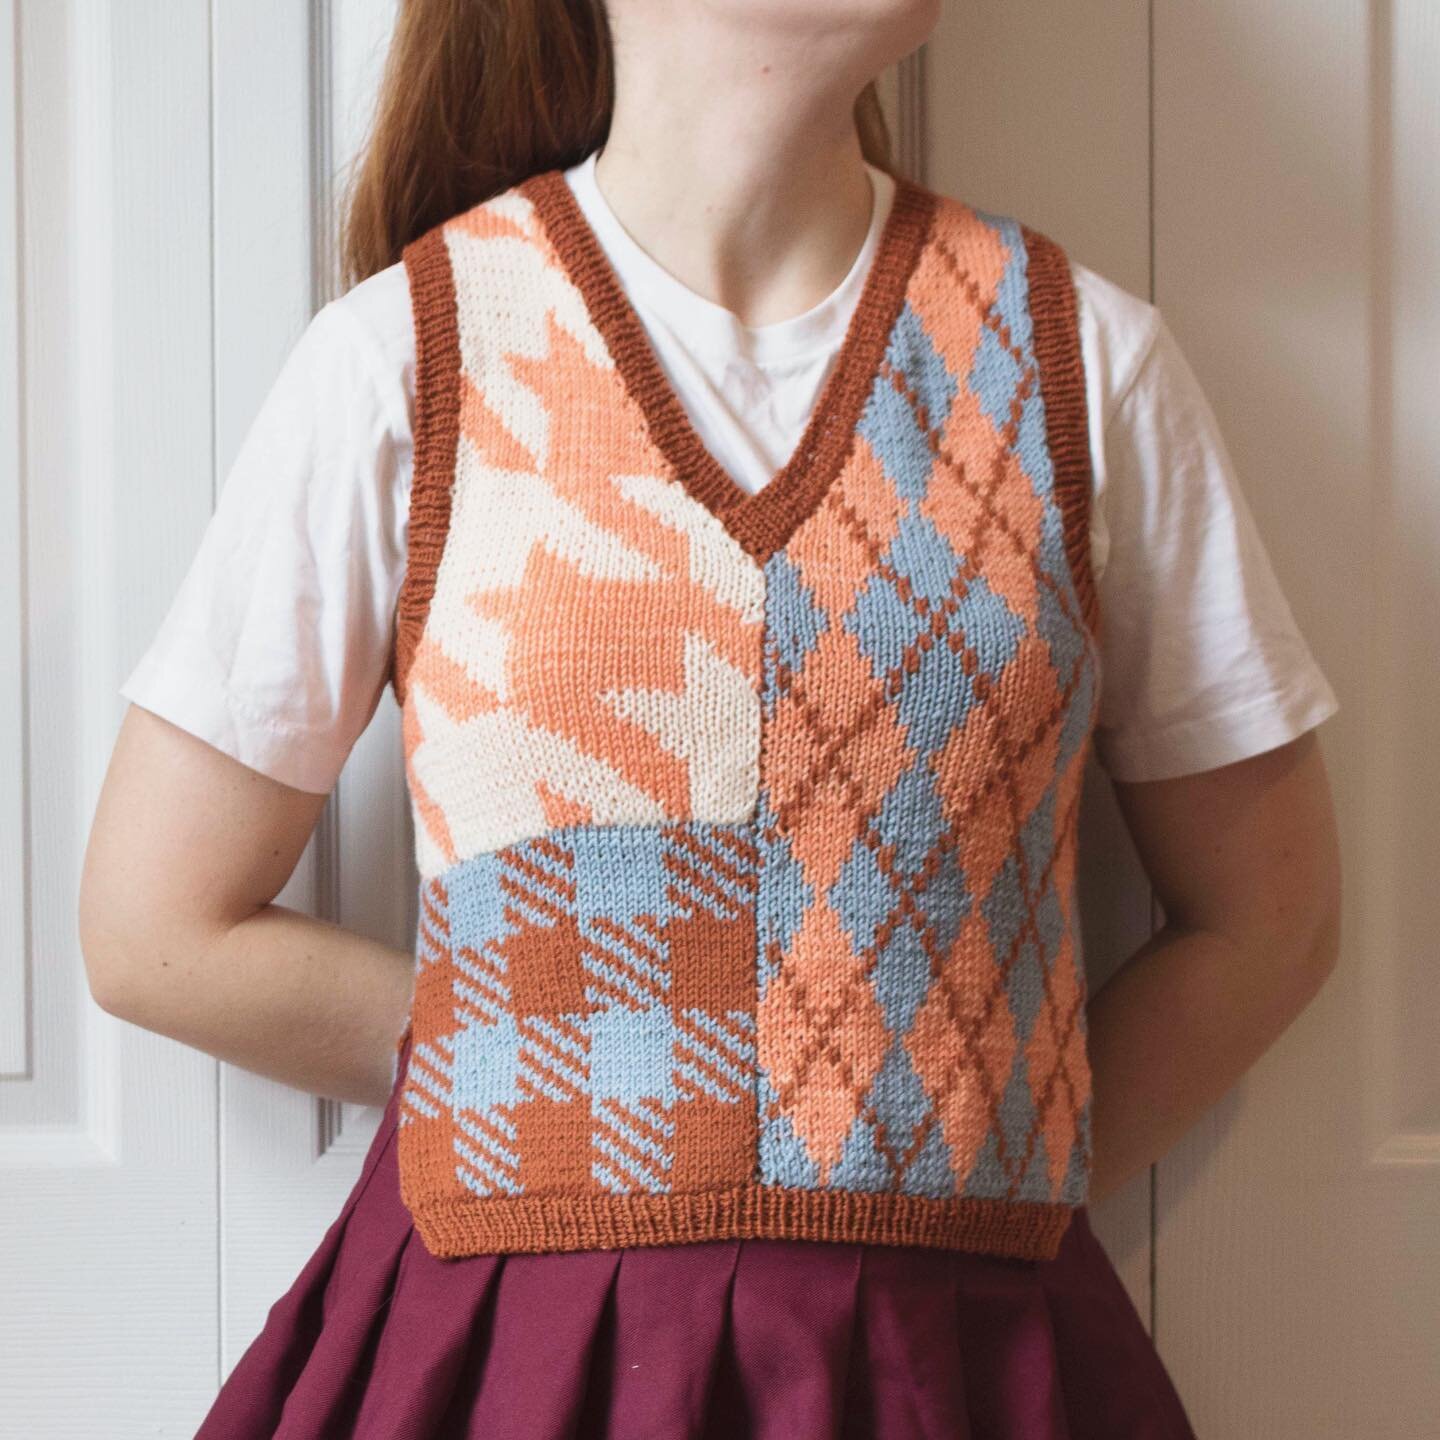 another reversible patchwork sweater vest :)
⁣
.⁣
⁣
.⁣
⁣
.⁣
⁣
.⁣
⁣

#handmade #fashiondesign #handknit #oneofakind #ooak #brooklyndesigner #handknitsweater #merinowool #sweatervest #slowfashion